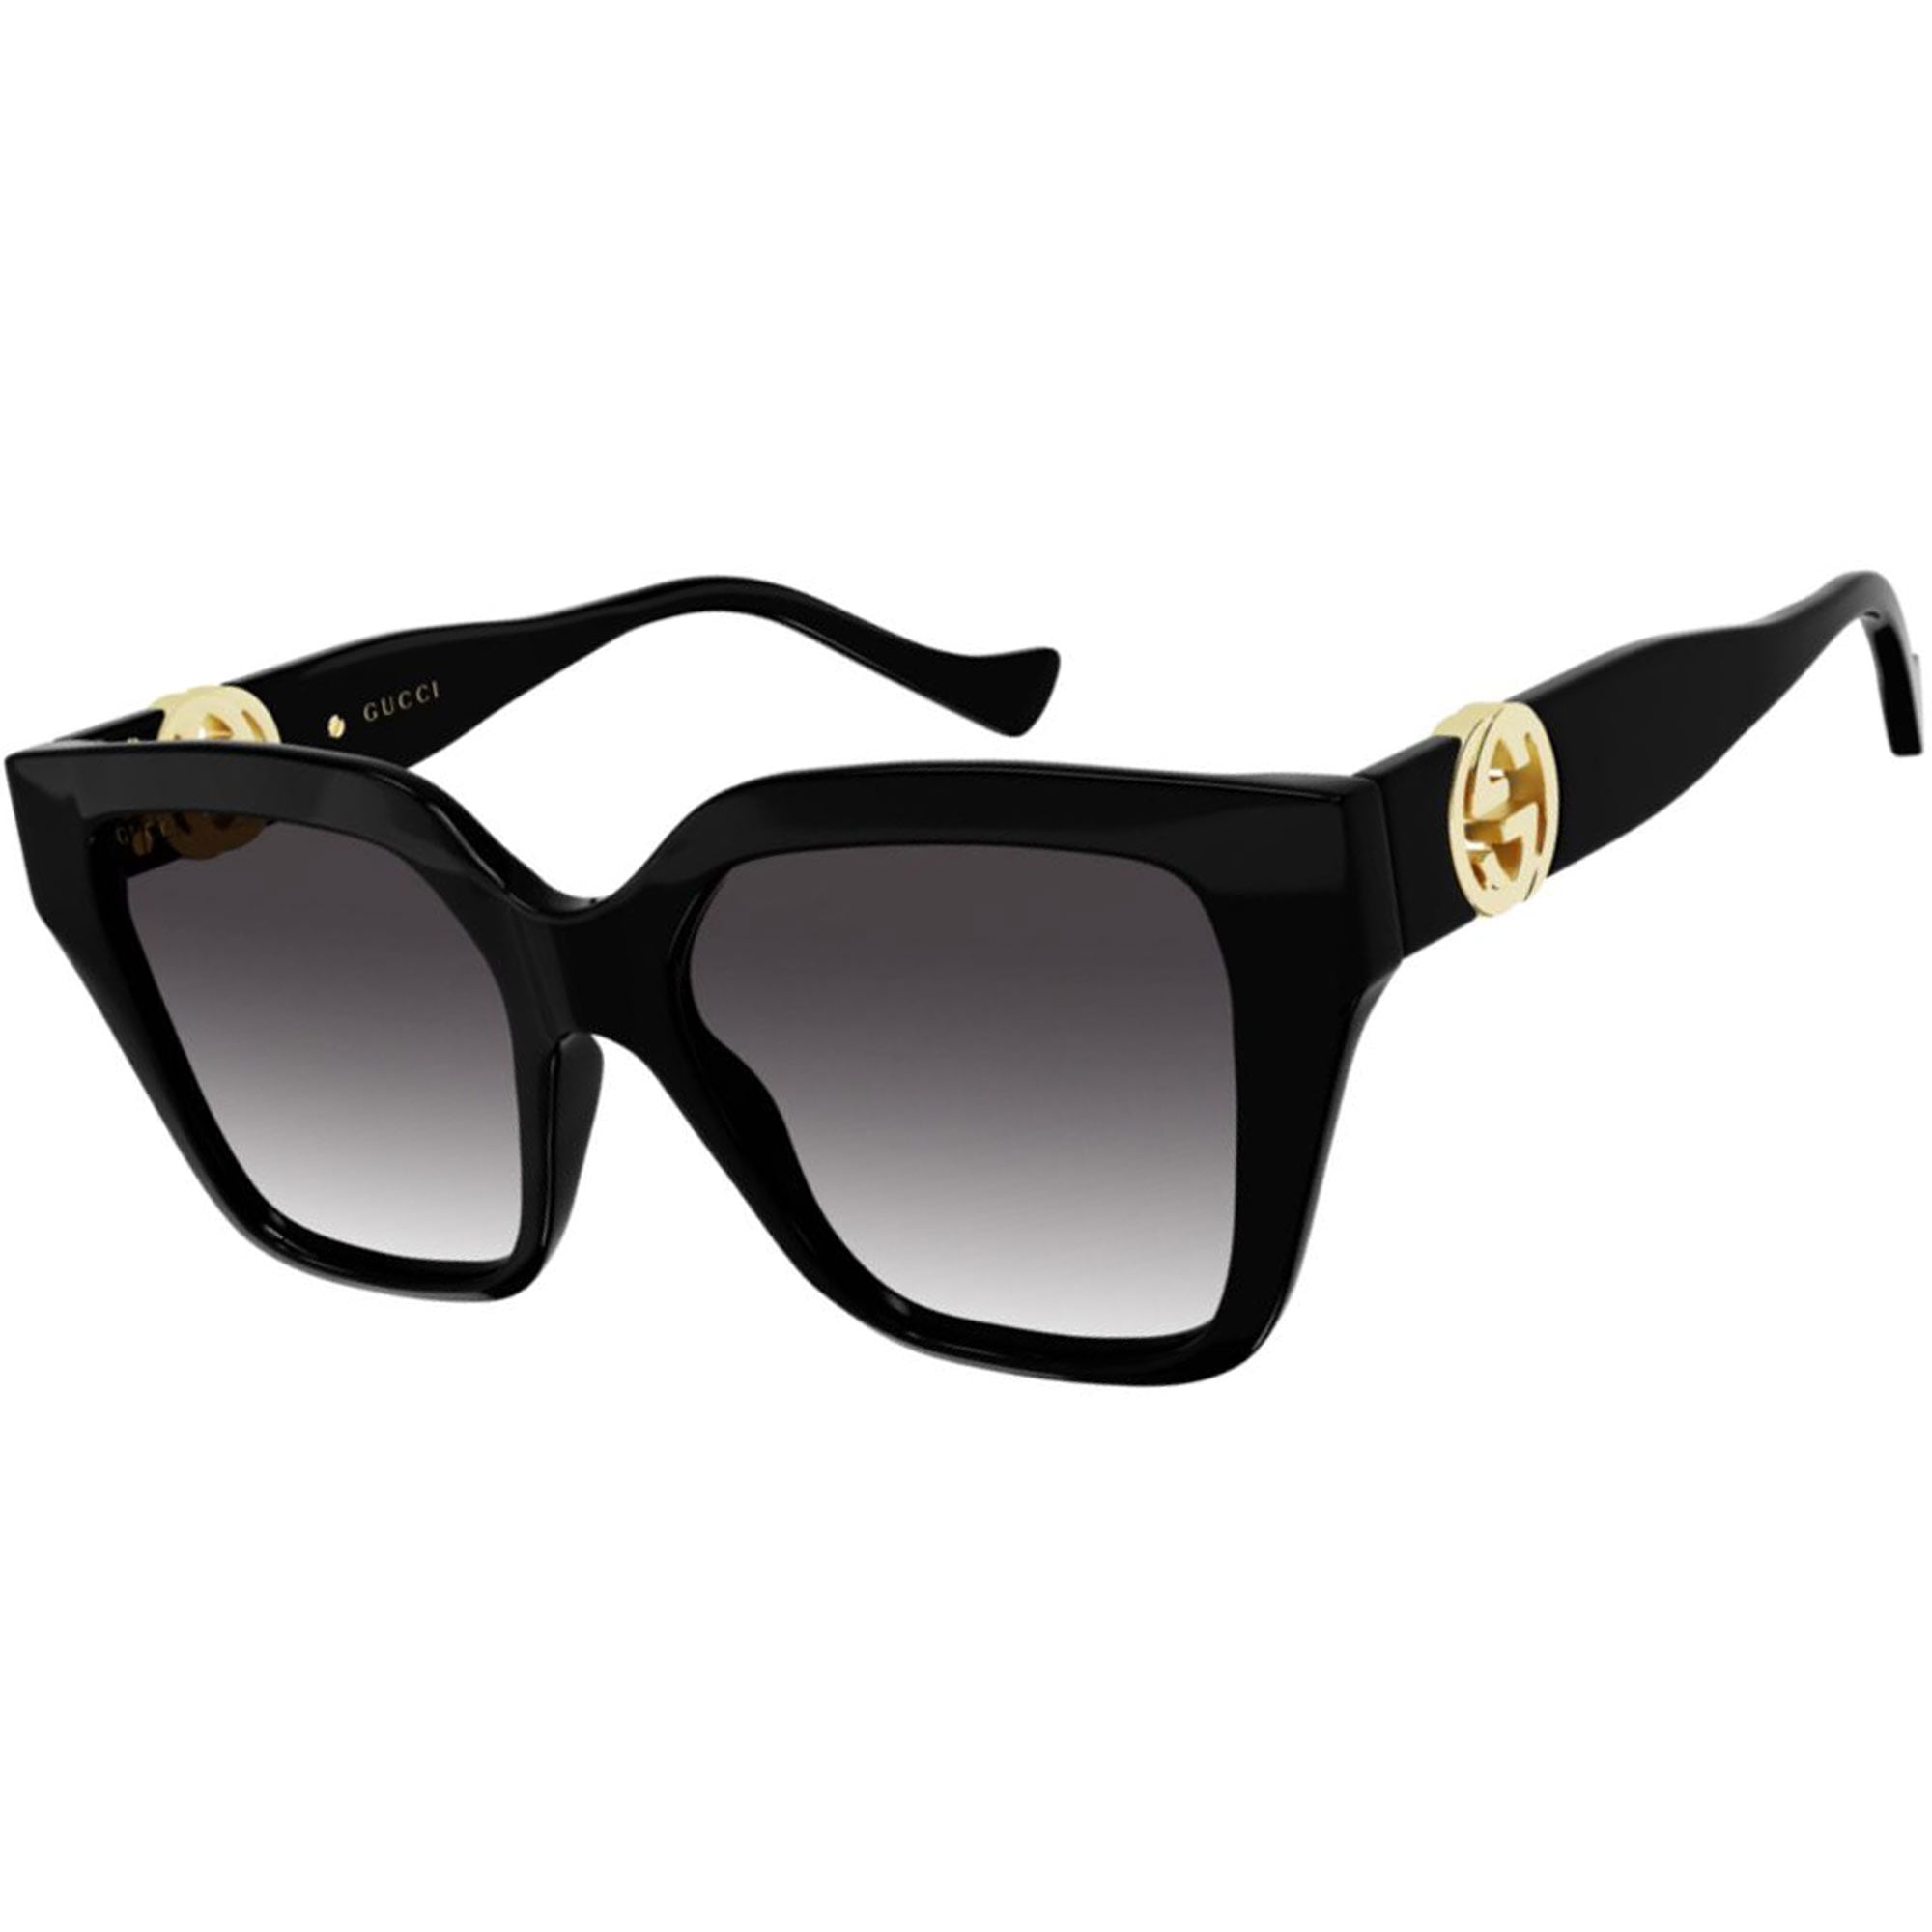 Gucci - GG1023S-008 Women's Sunglasses Black/Grey - Walmart.com